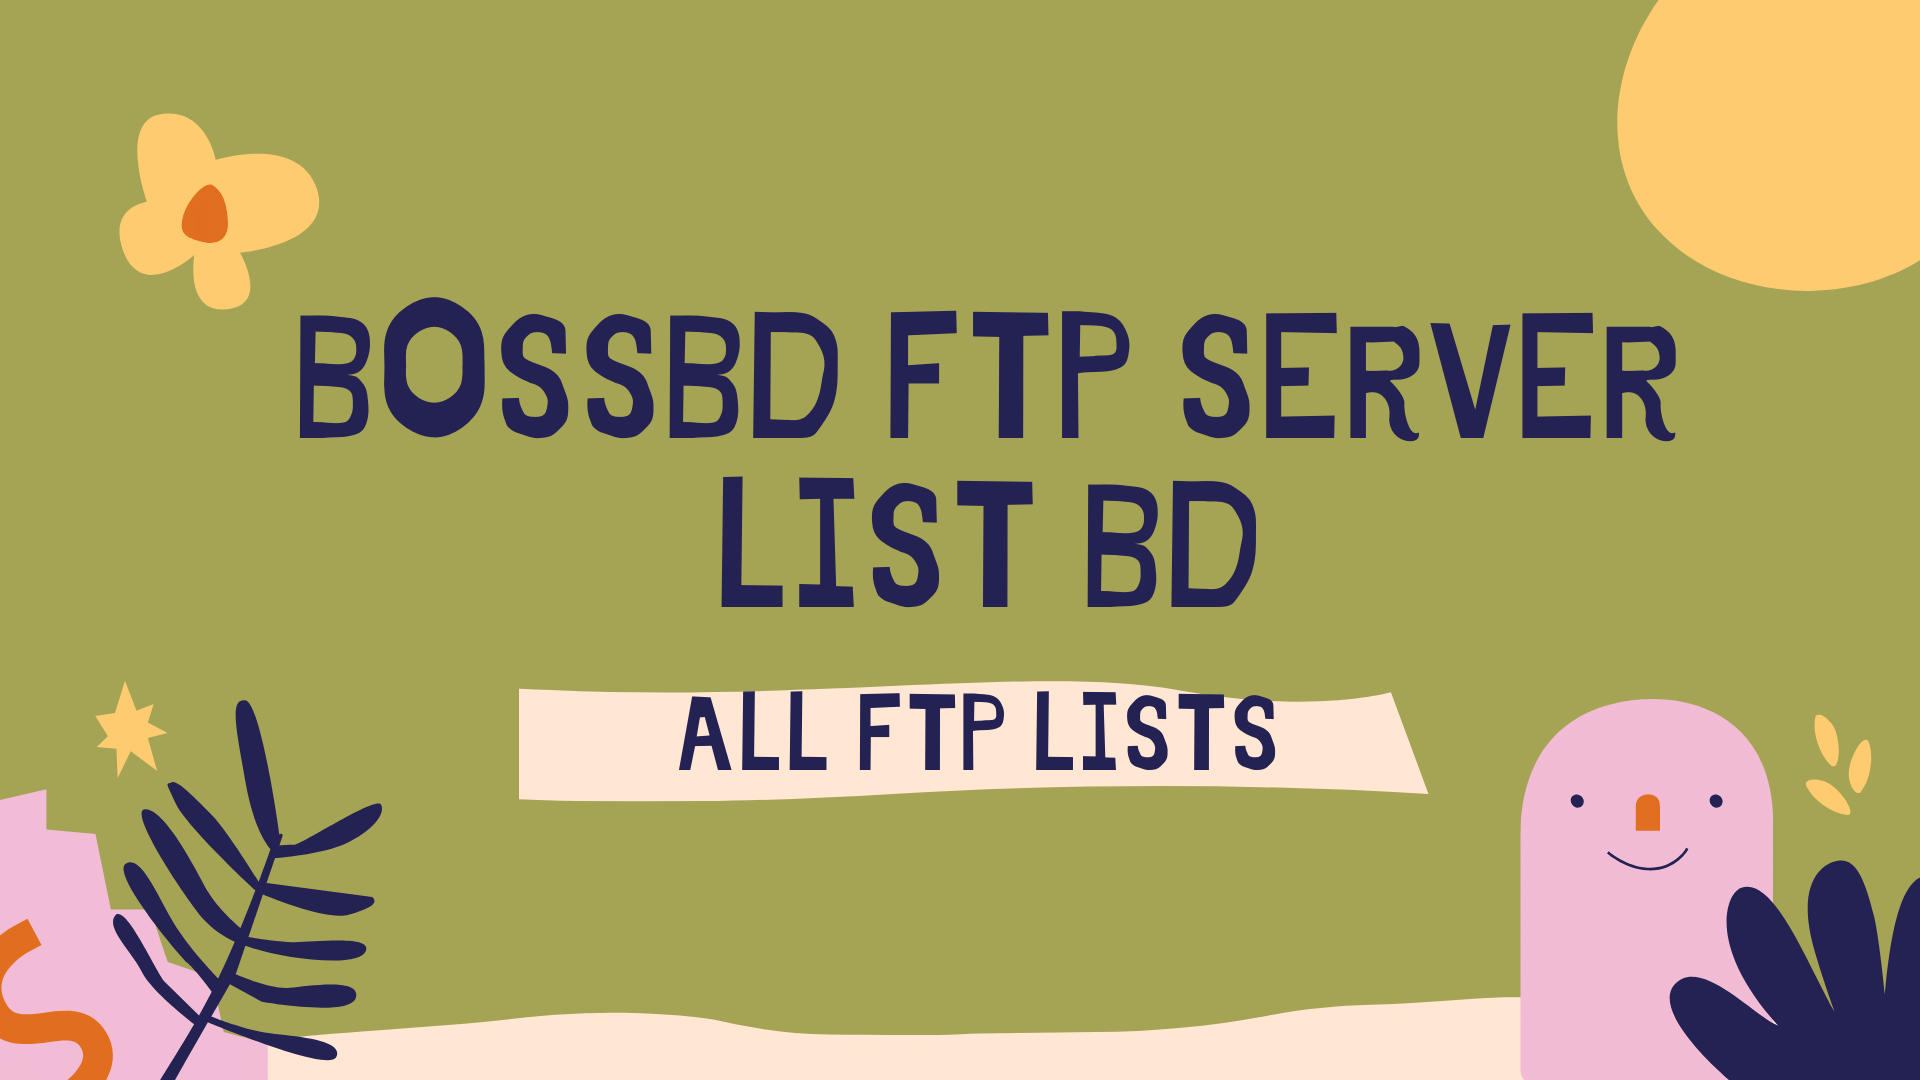 BOSSBD FTP SERVER LIST BD LATEST 2021 UPDATE